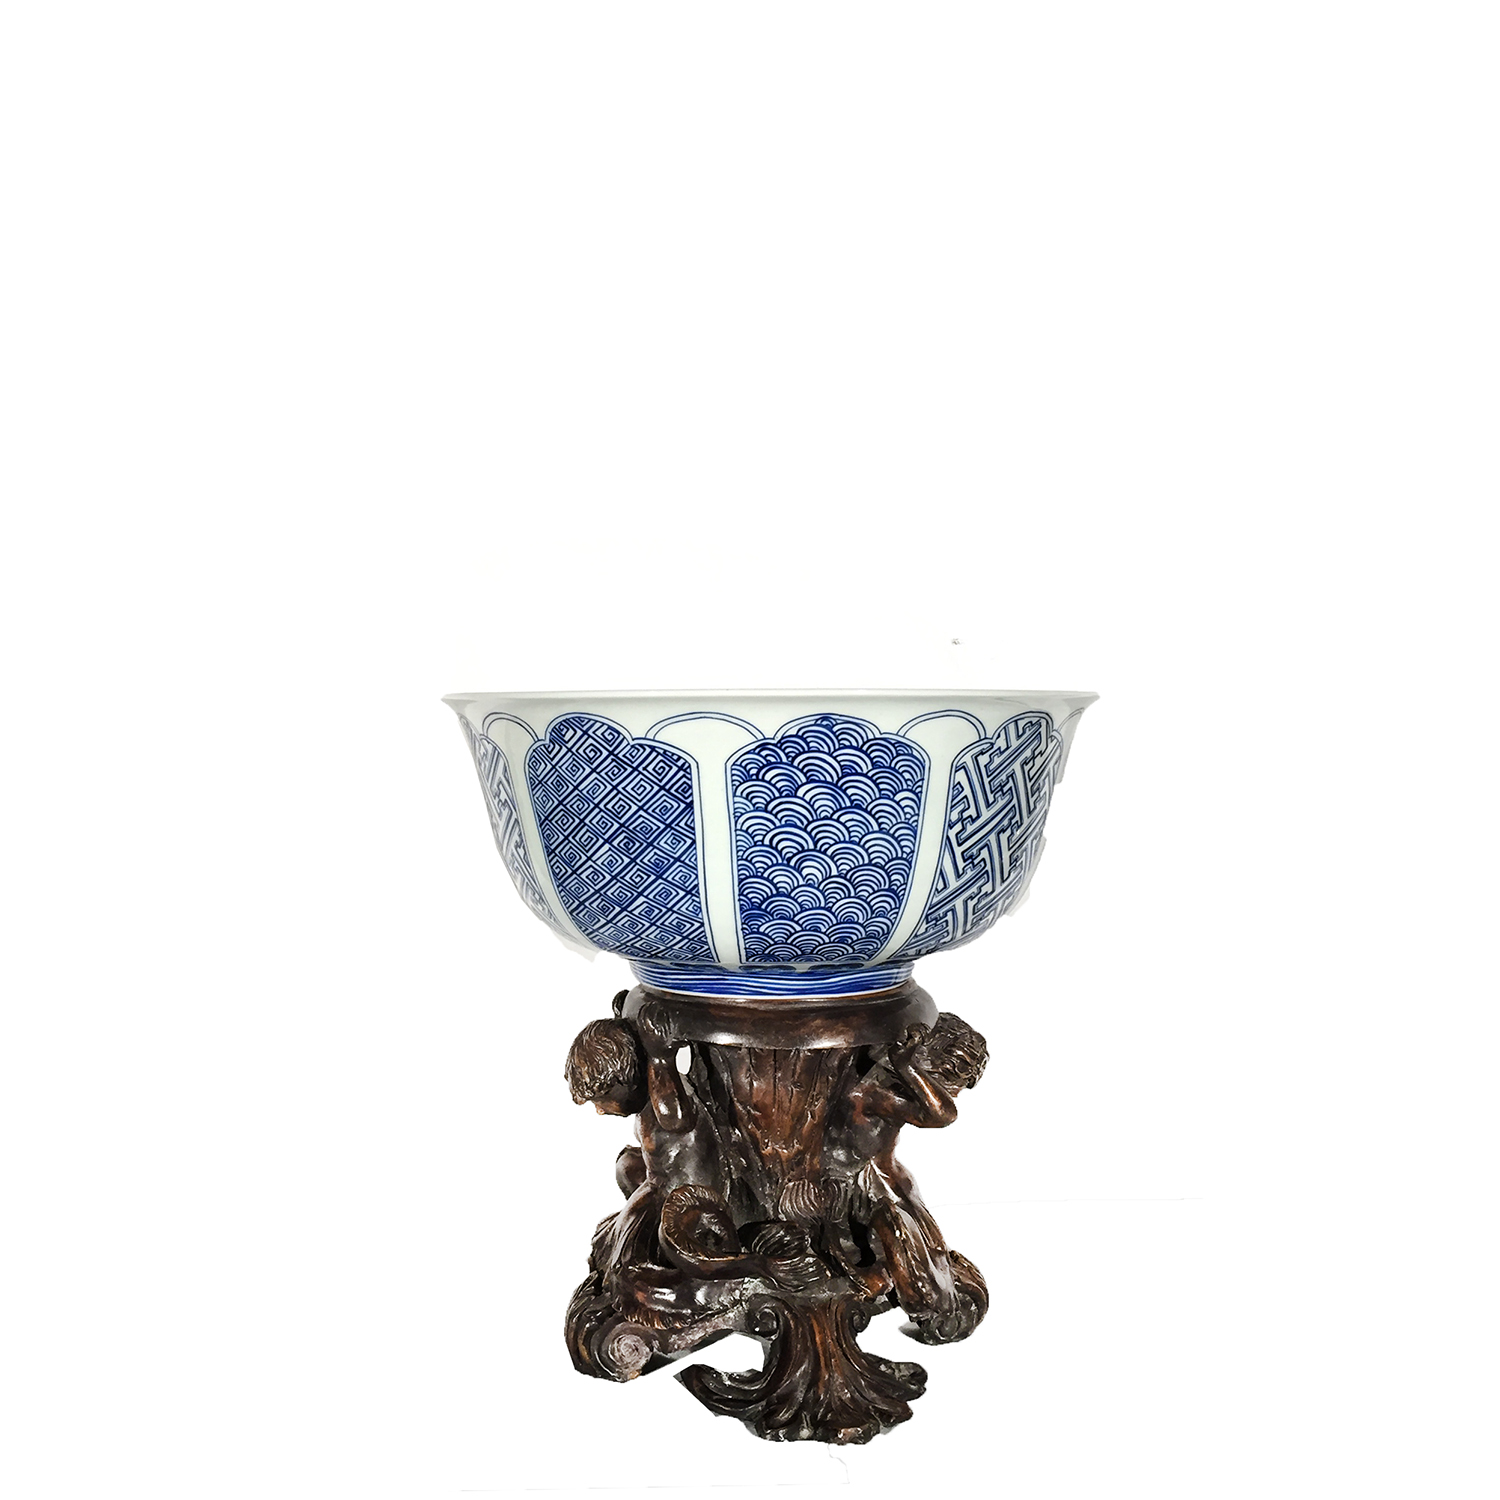 Cast Bronze Merboy Stand holding Porcelain Bowl